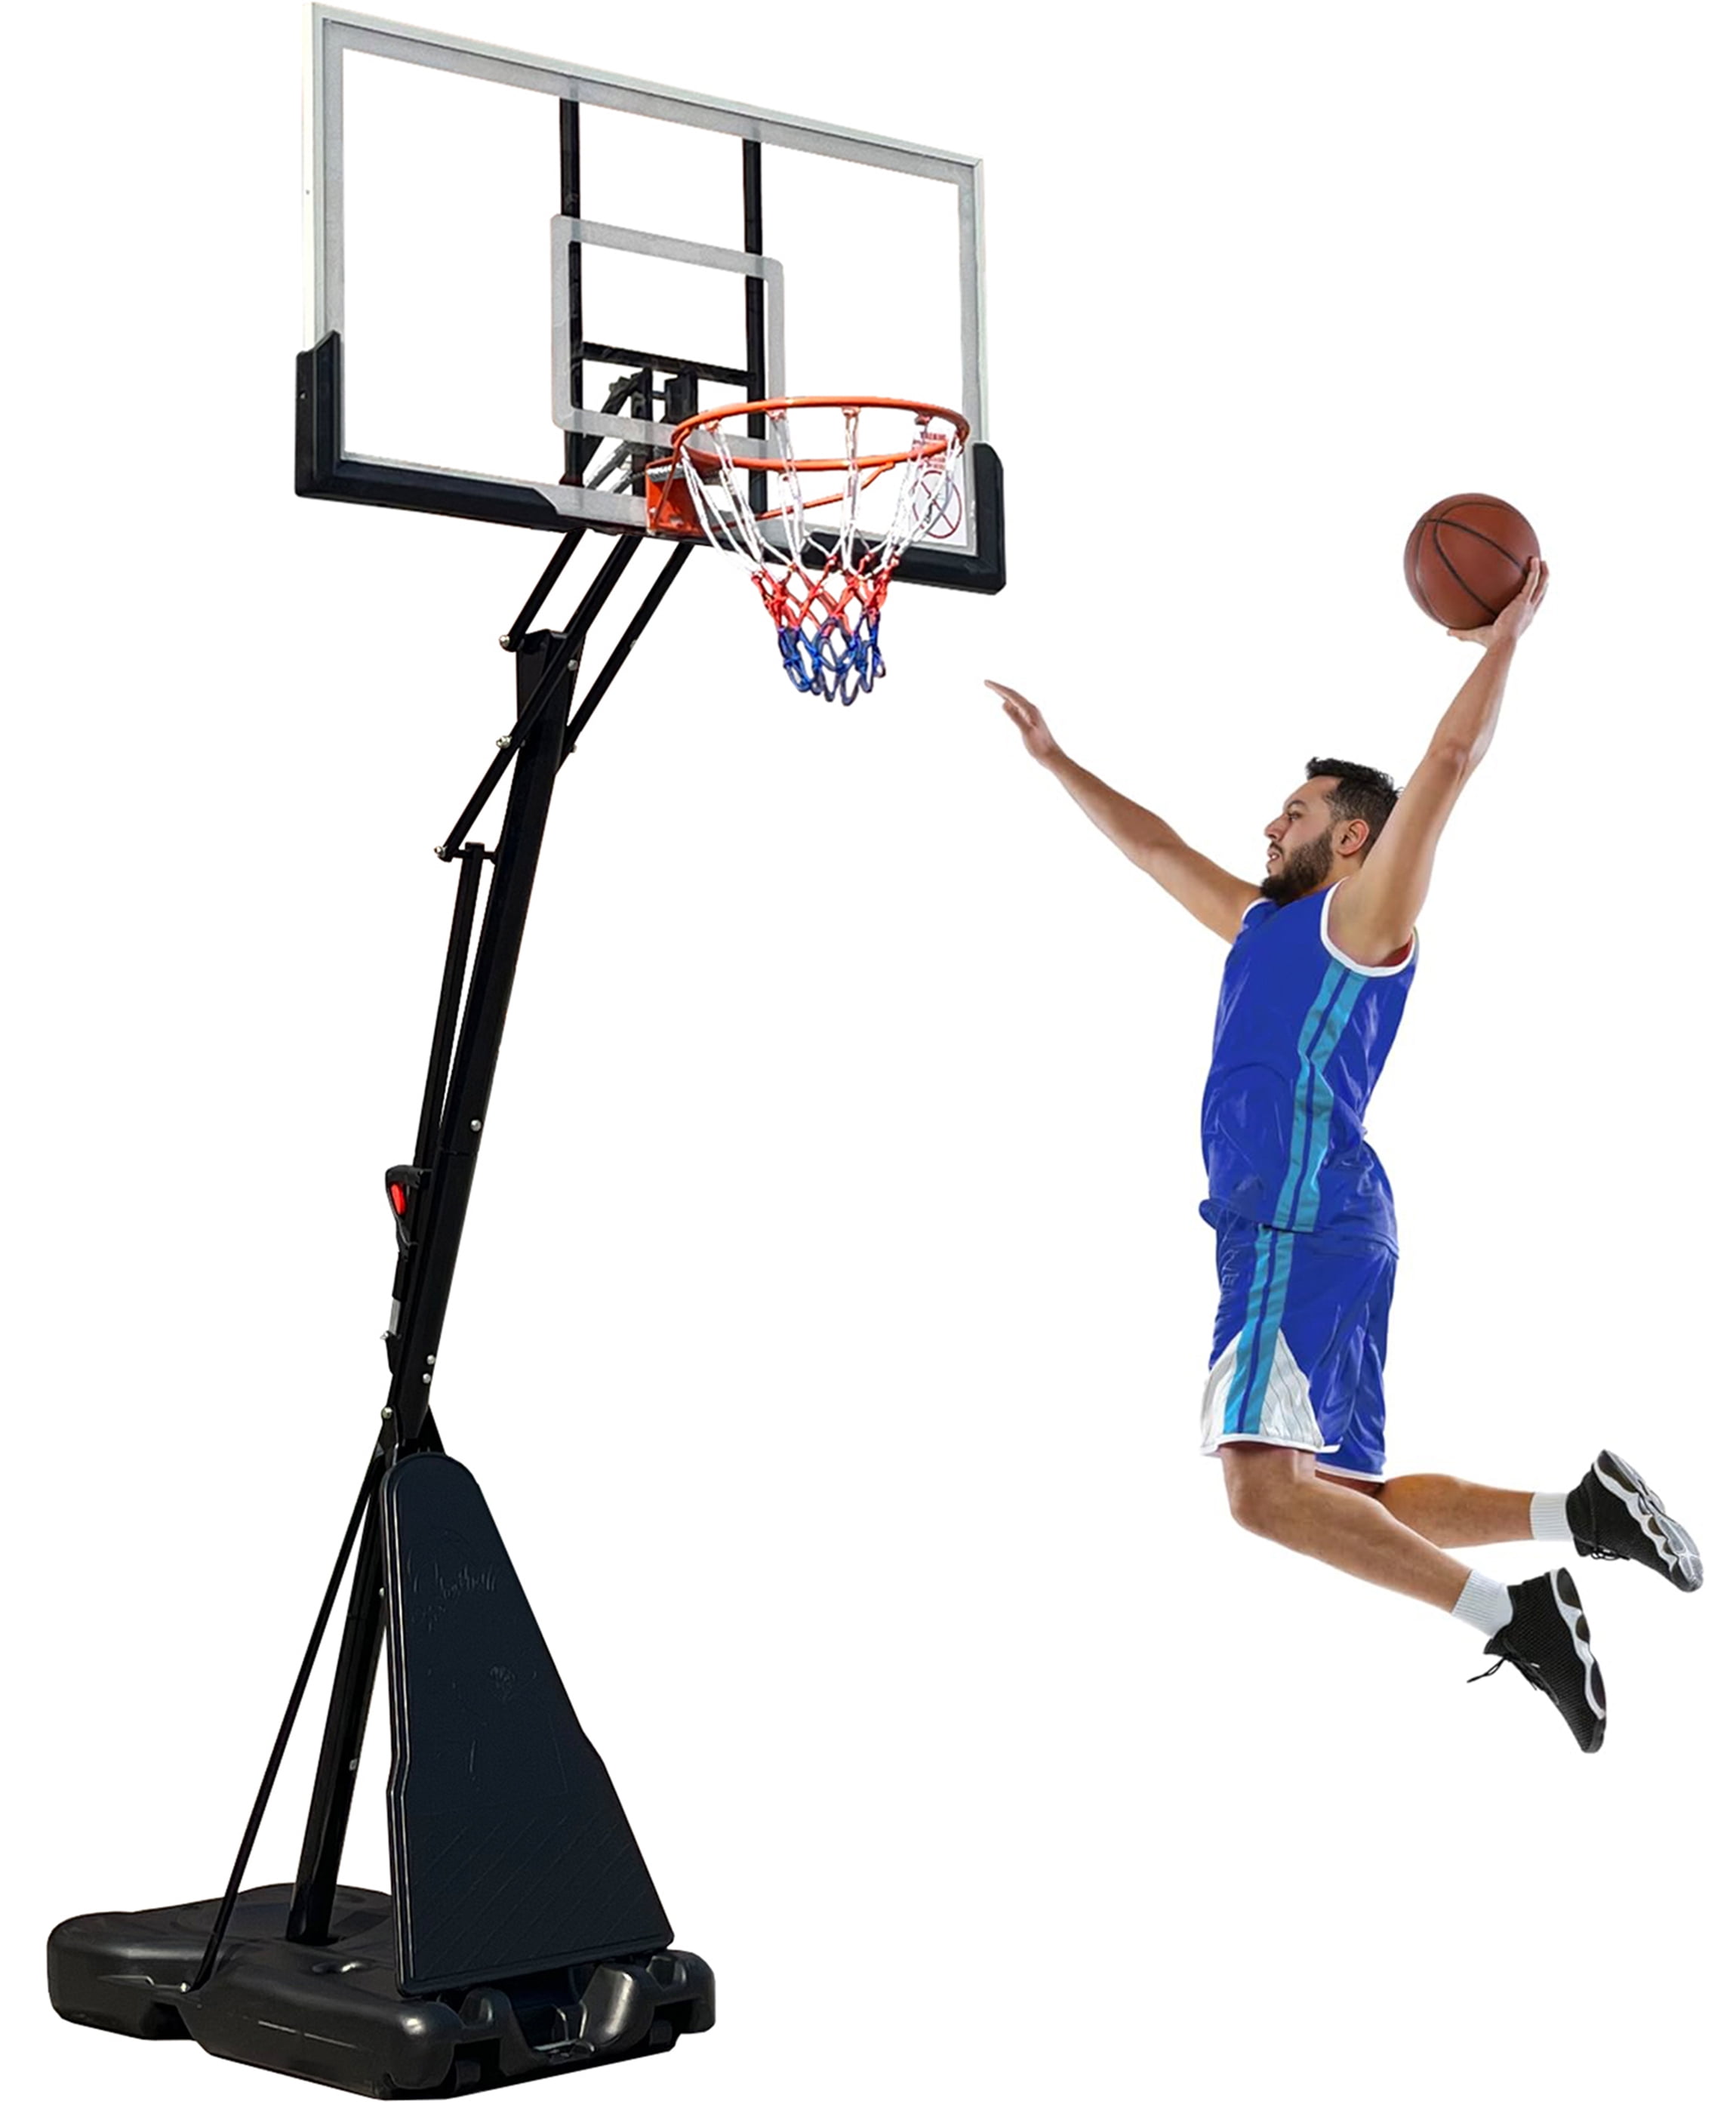 Holiday Gift Guide: NBA Basketball Hoop, the perfect gift for ballers | NBA .com